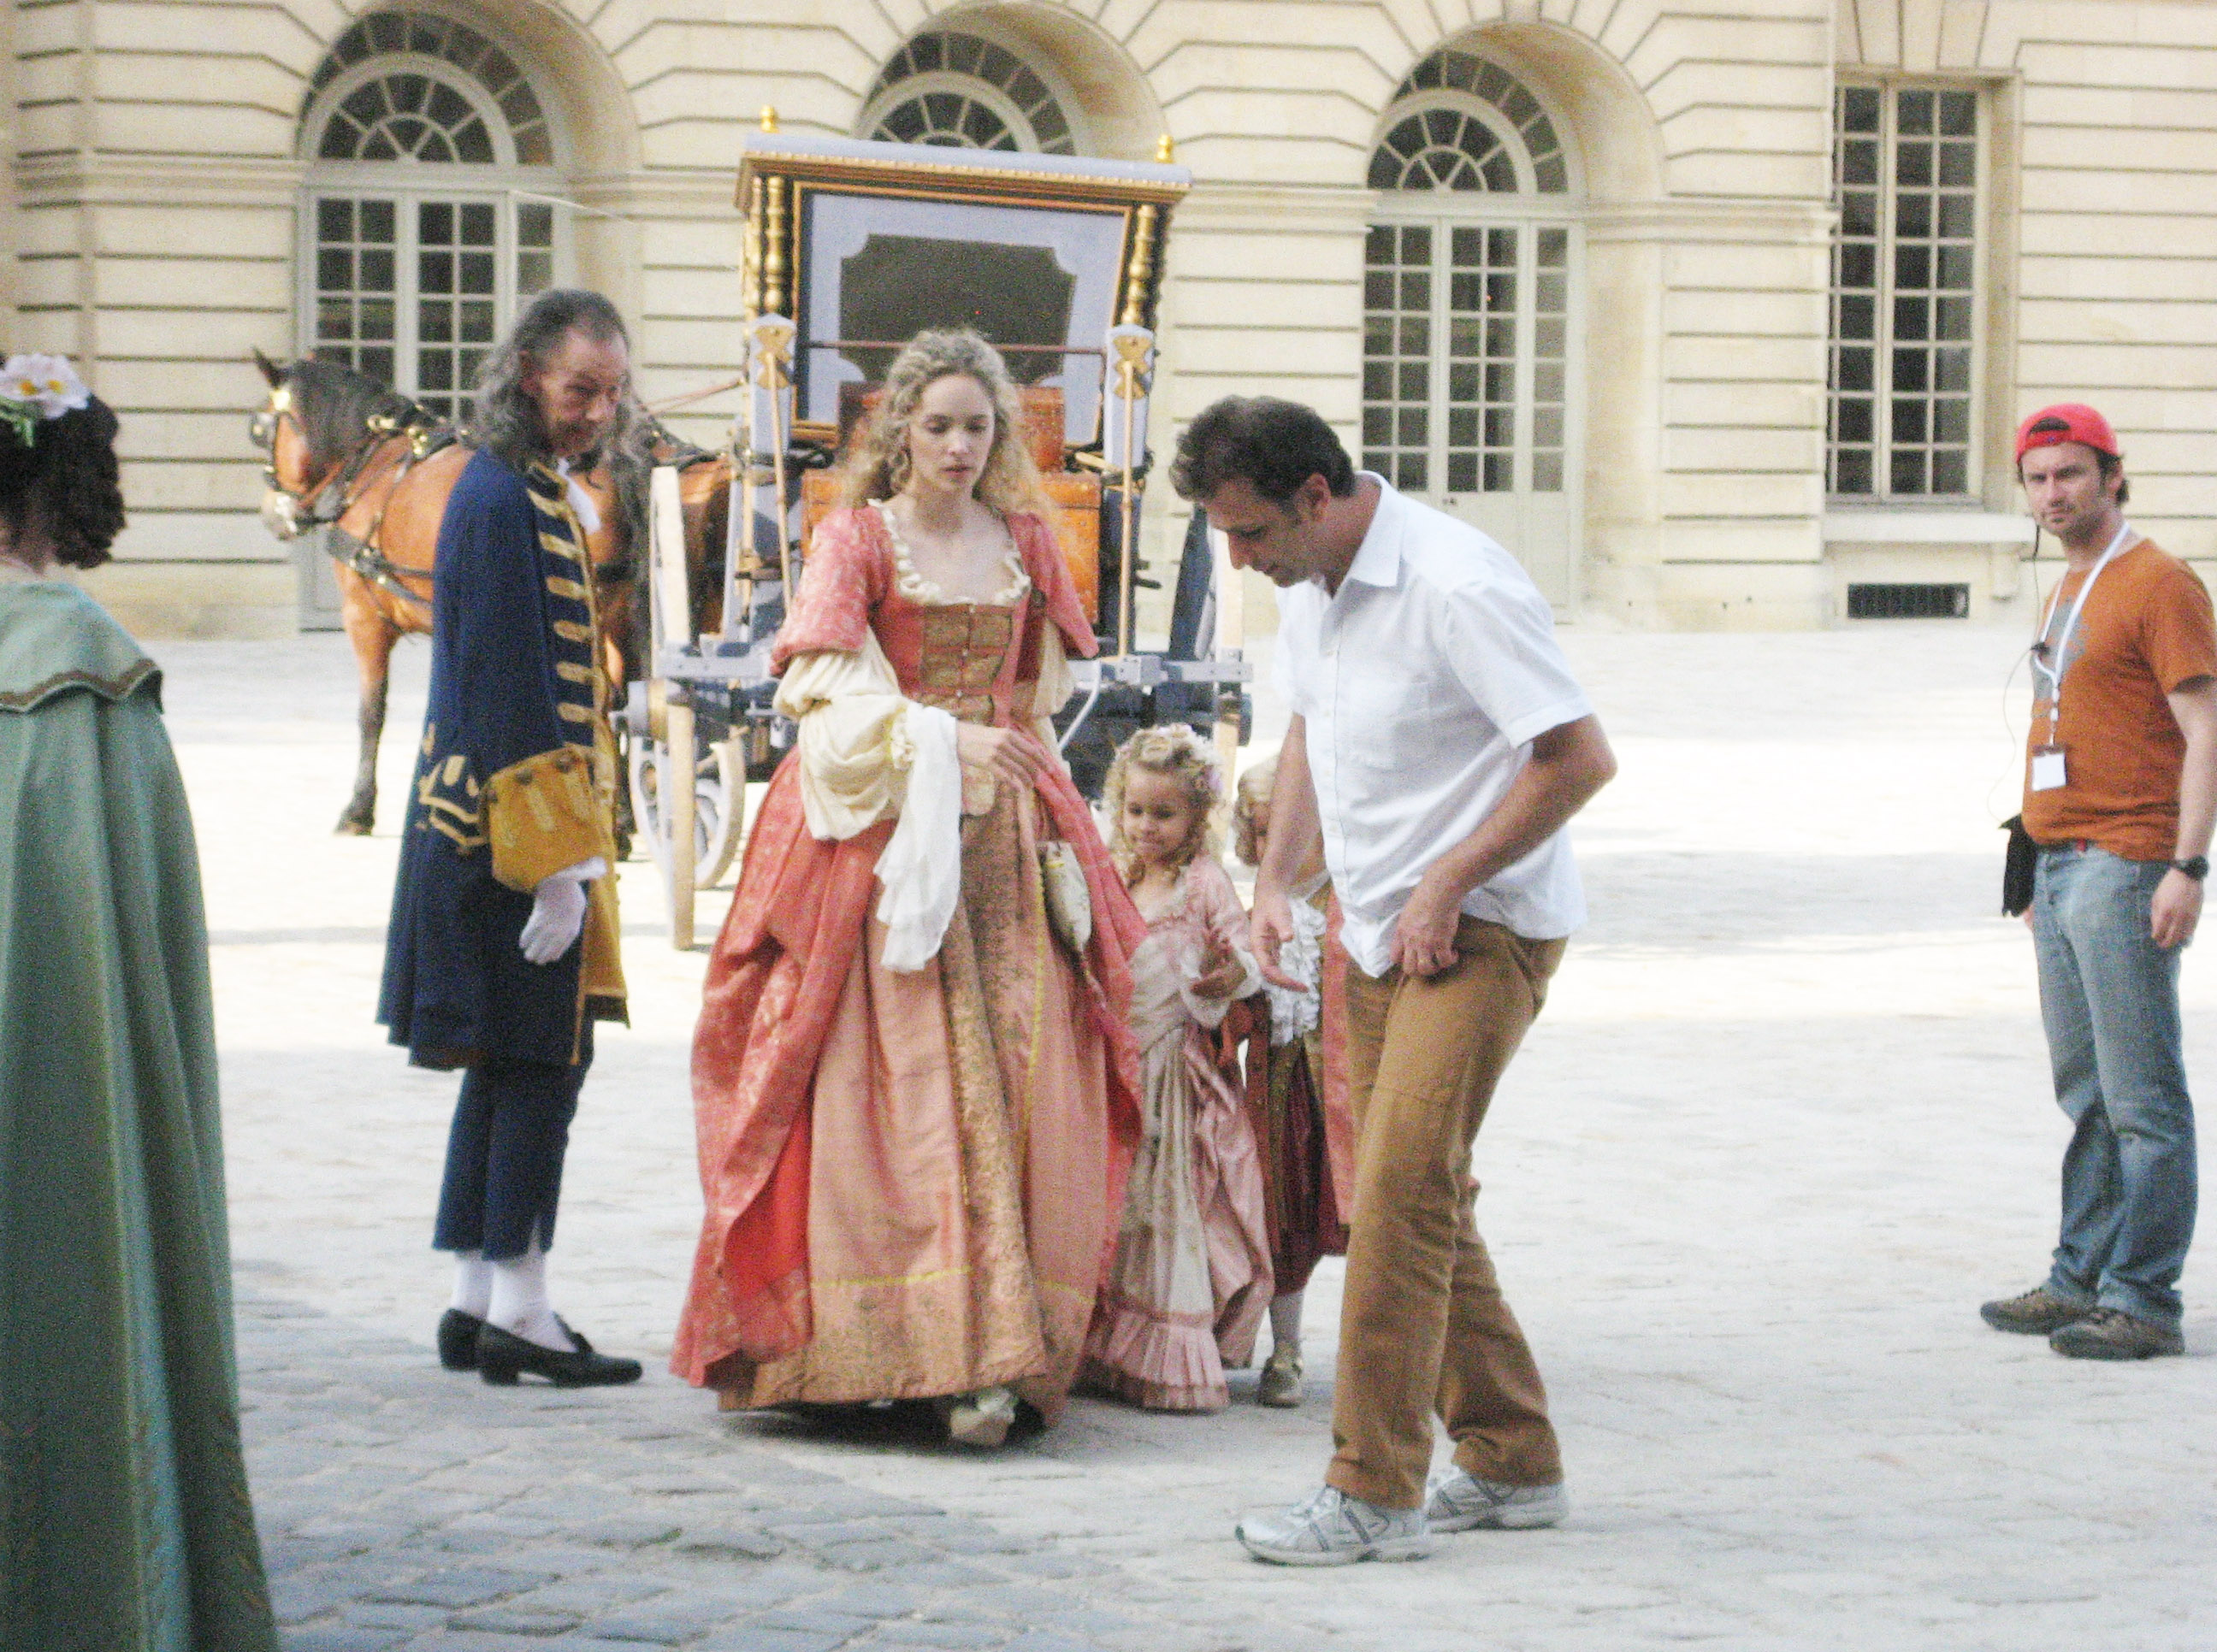 Still of Thierry Binisti and Laura Weissbecker in Versailles